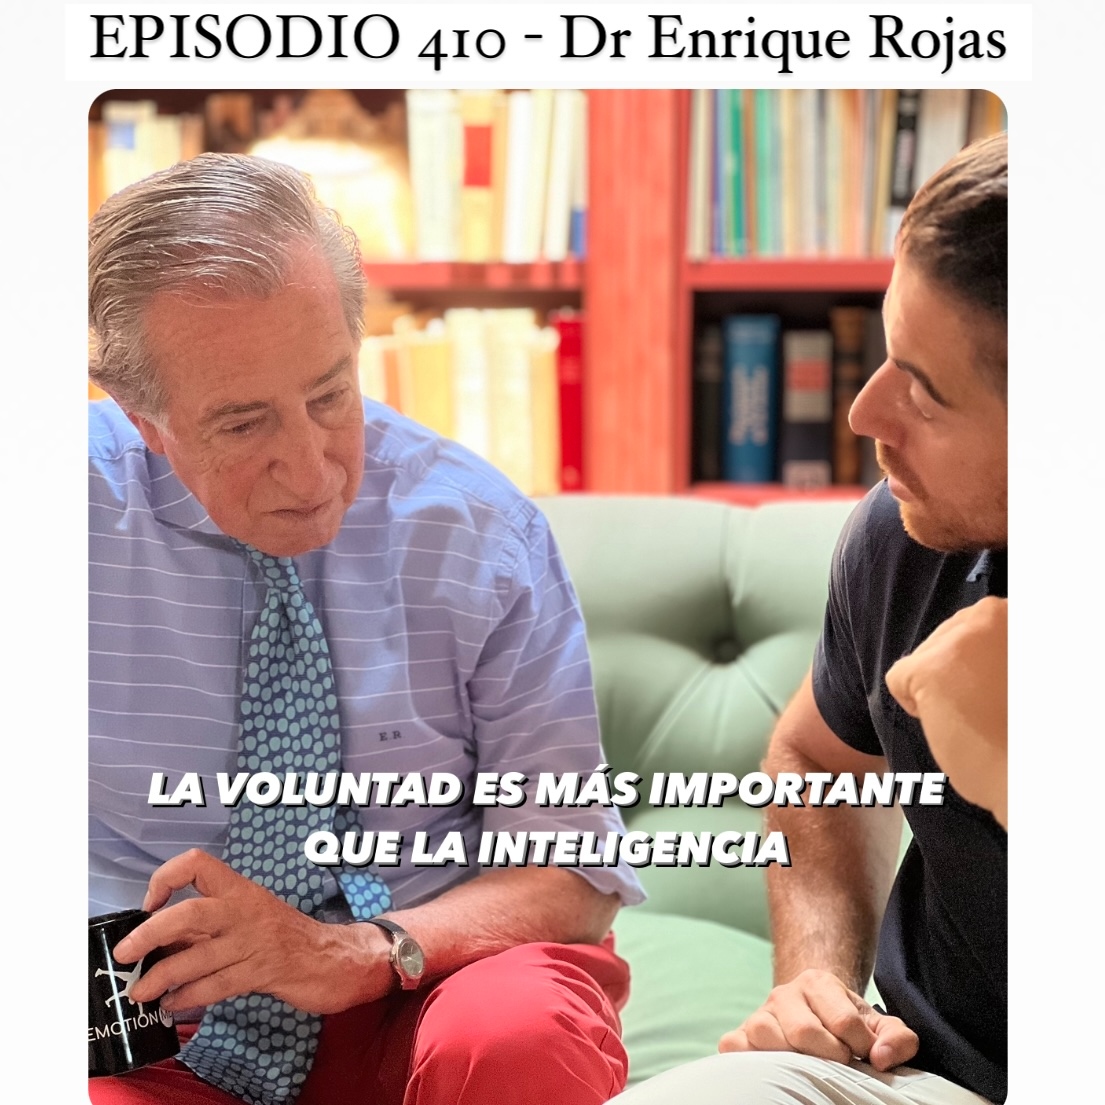 EPISODIO 410 - Dr Enrique Rojas

SV RTH VN)
QUE LA INT.